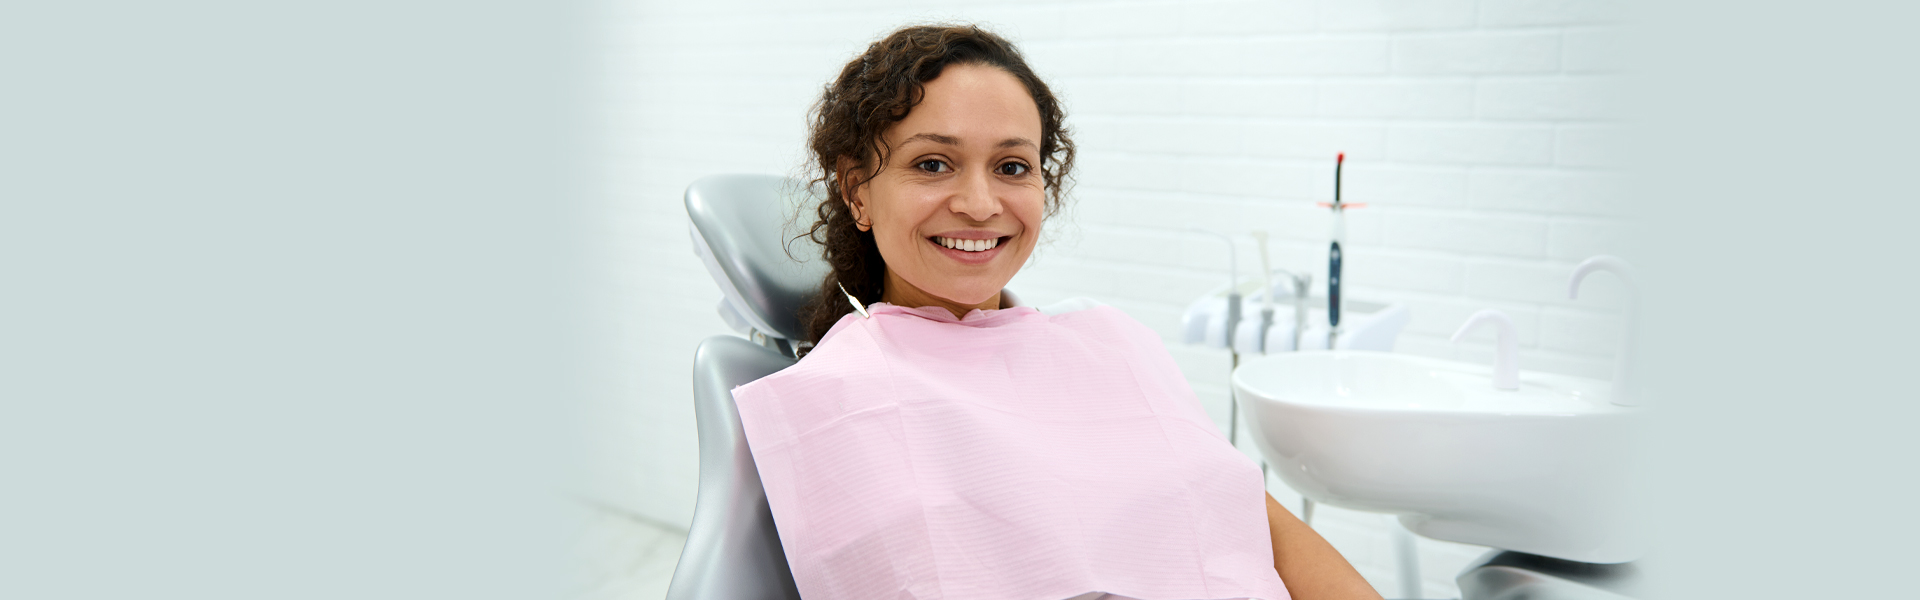 Family Dentistry: 4 Basic Dental Procedures Plus Benefits